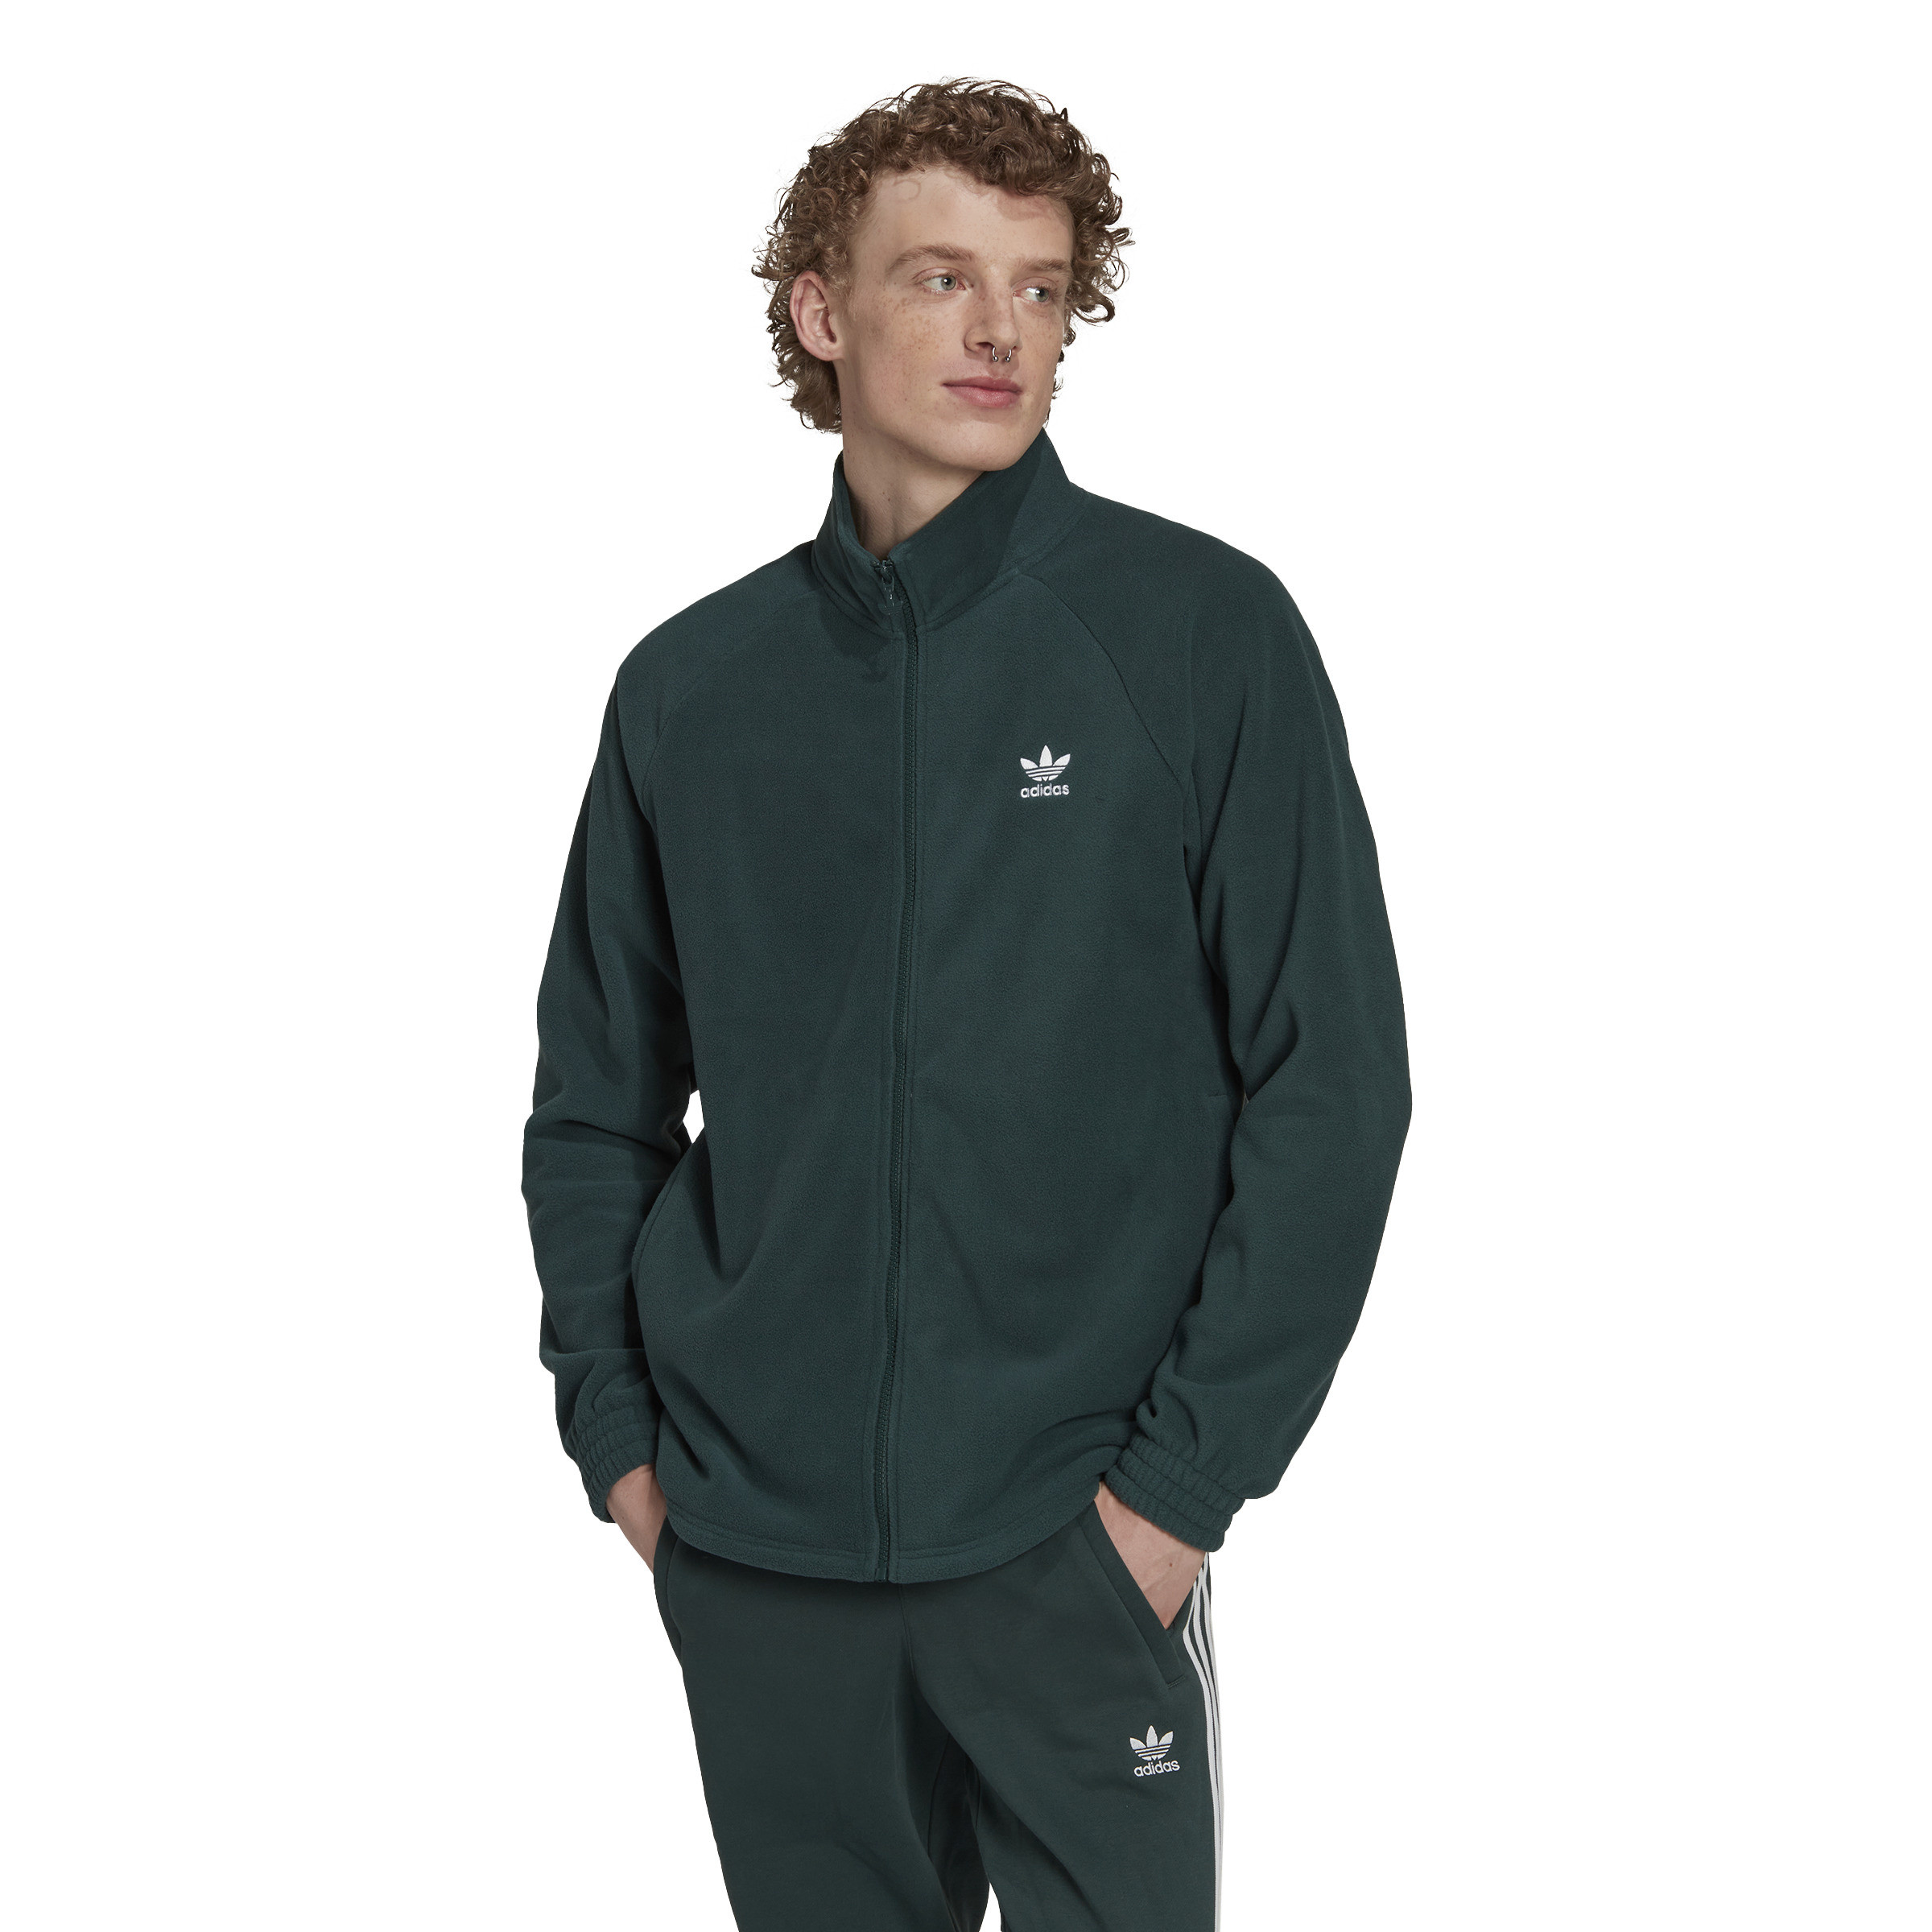 Adidas - Adicolor Classics Trefoil Fleece Jacket, Dark Green, large image number 1